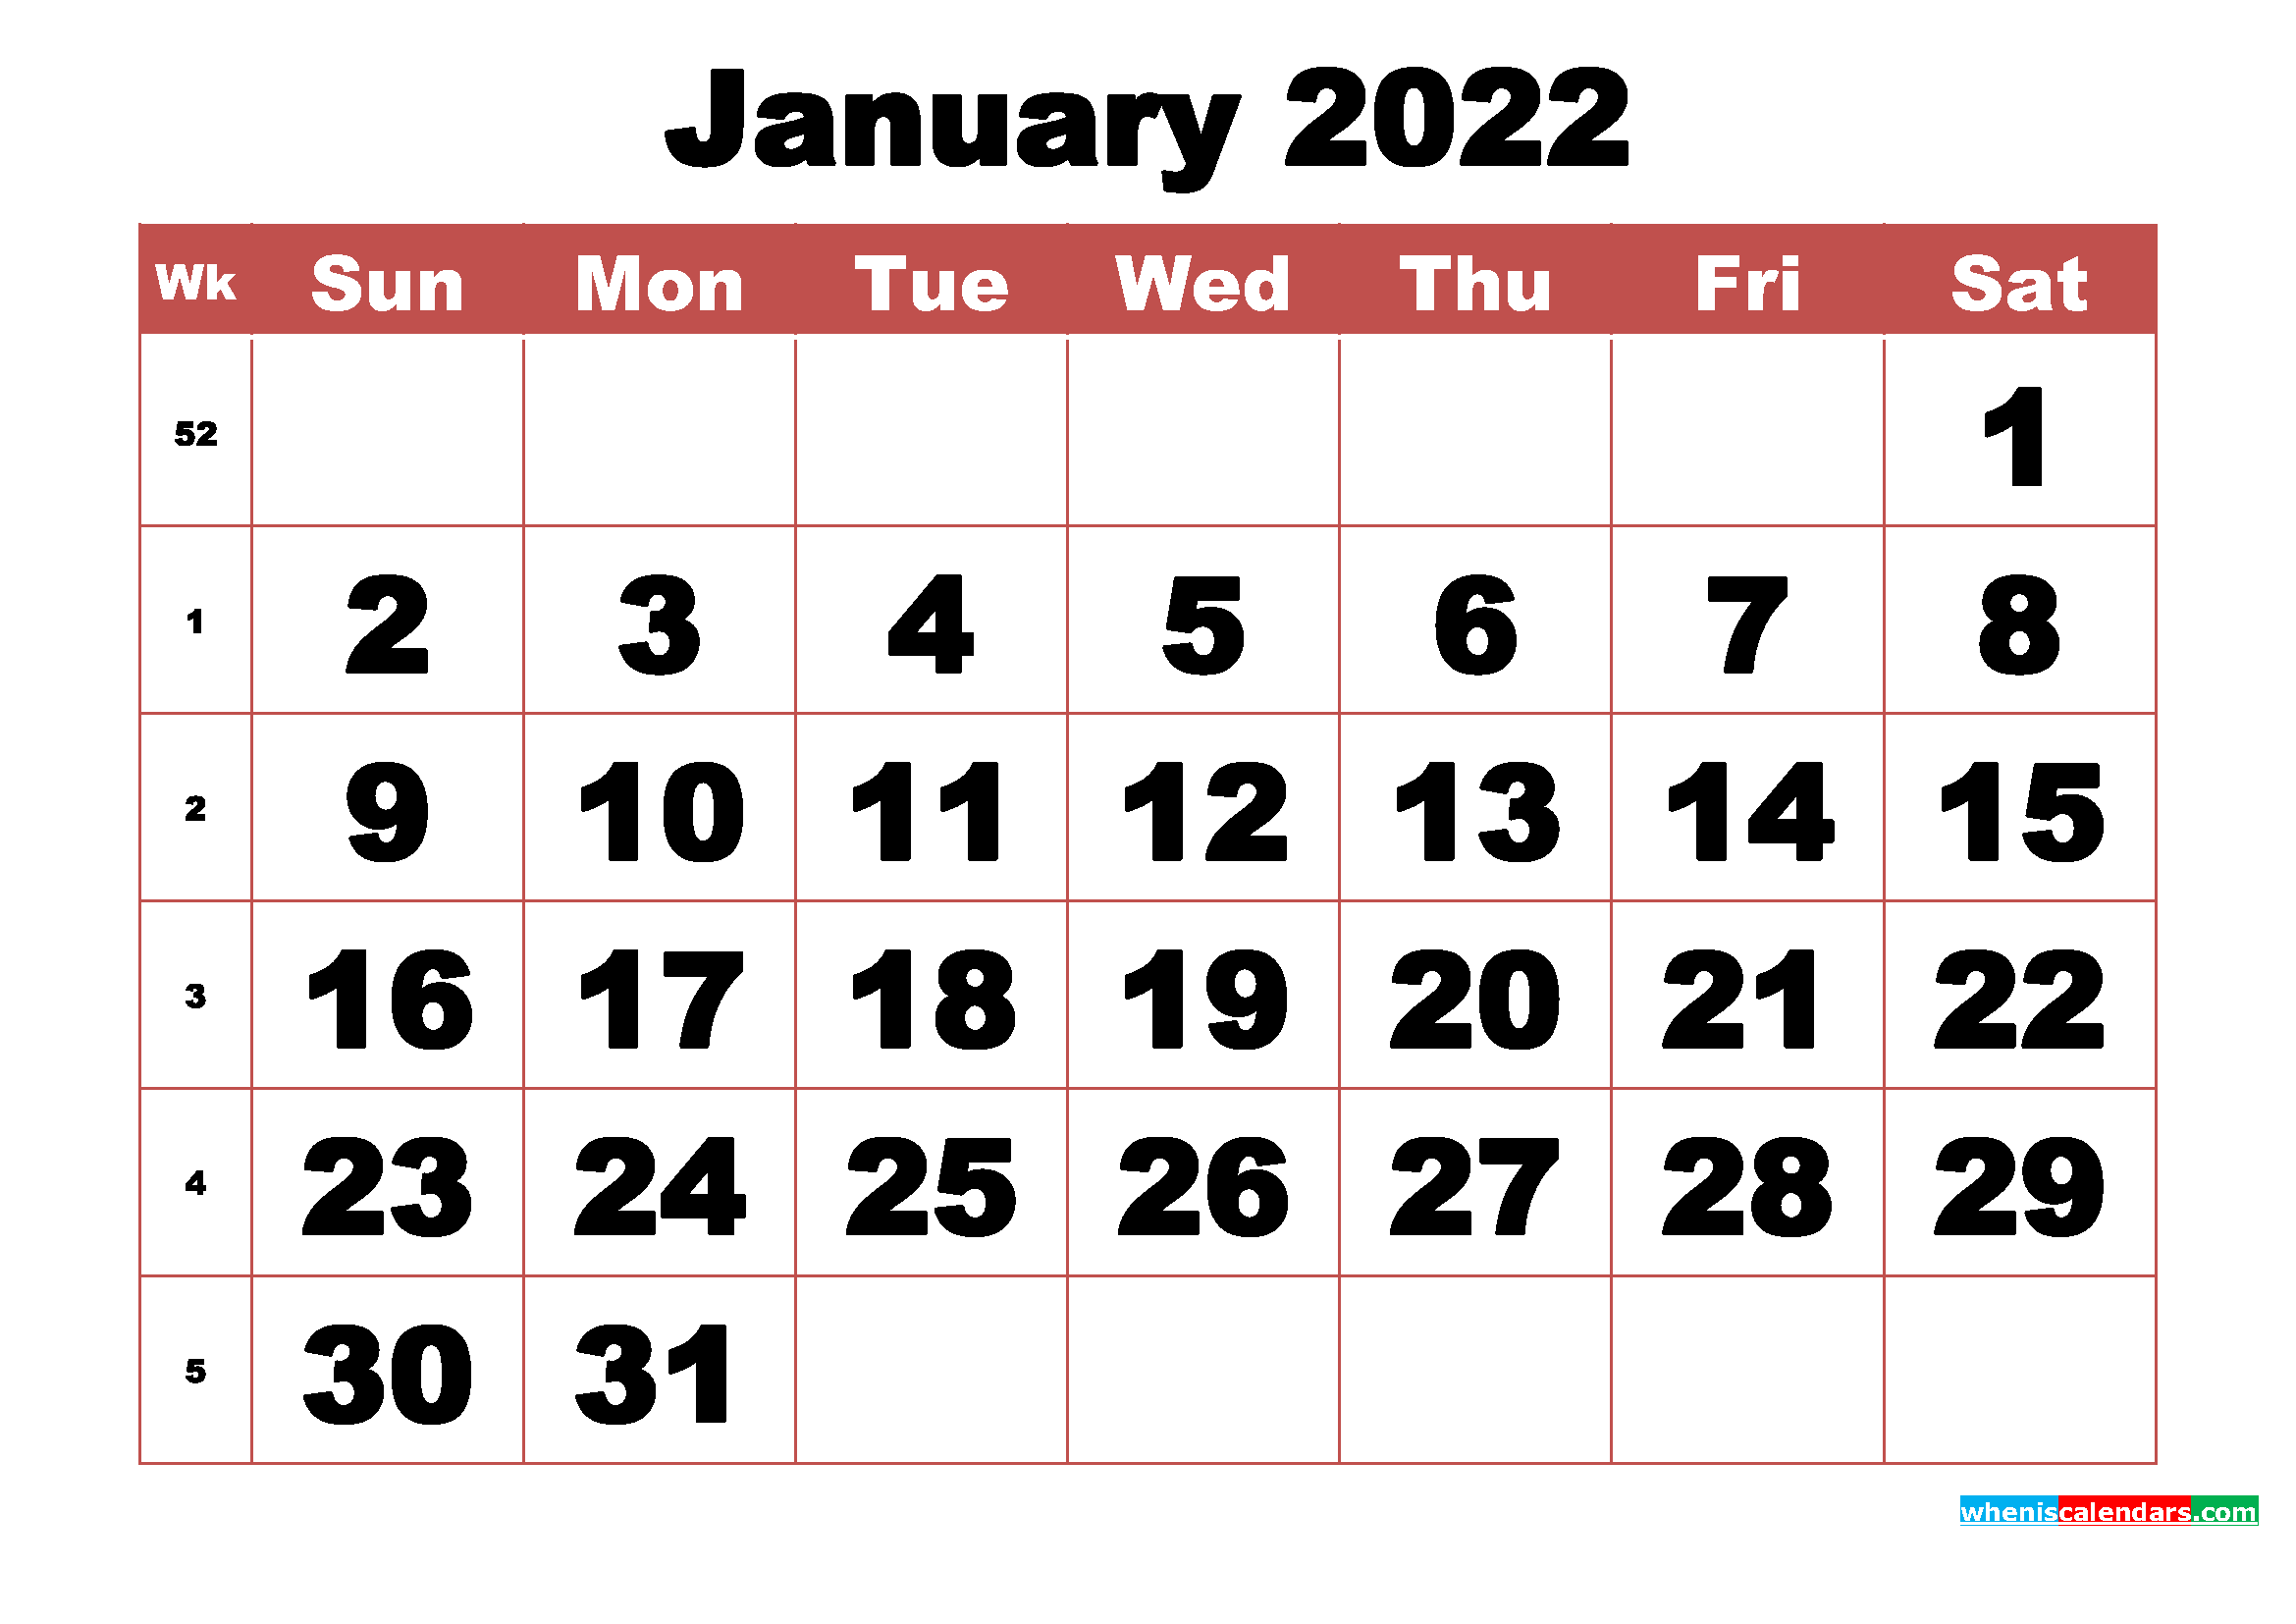 blank calendar may 2022